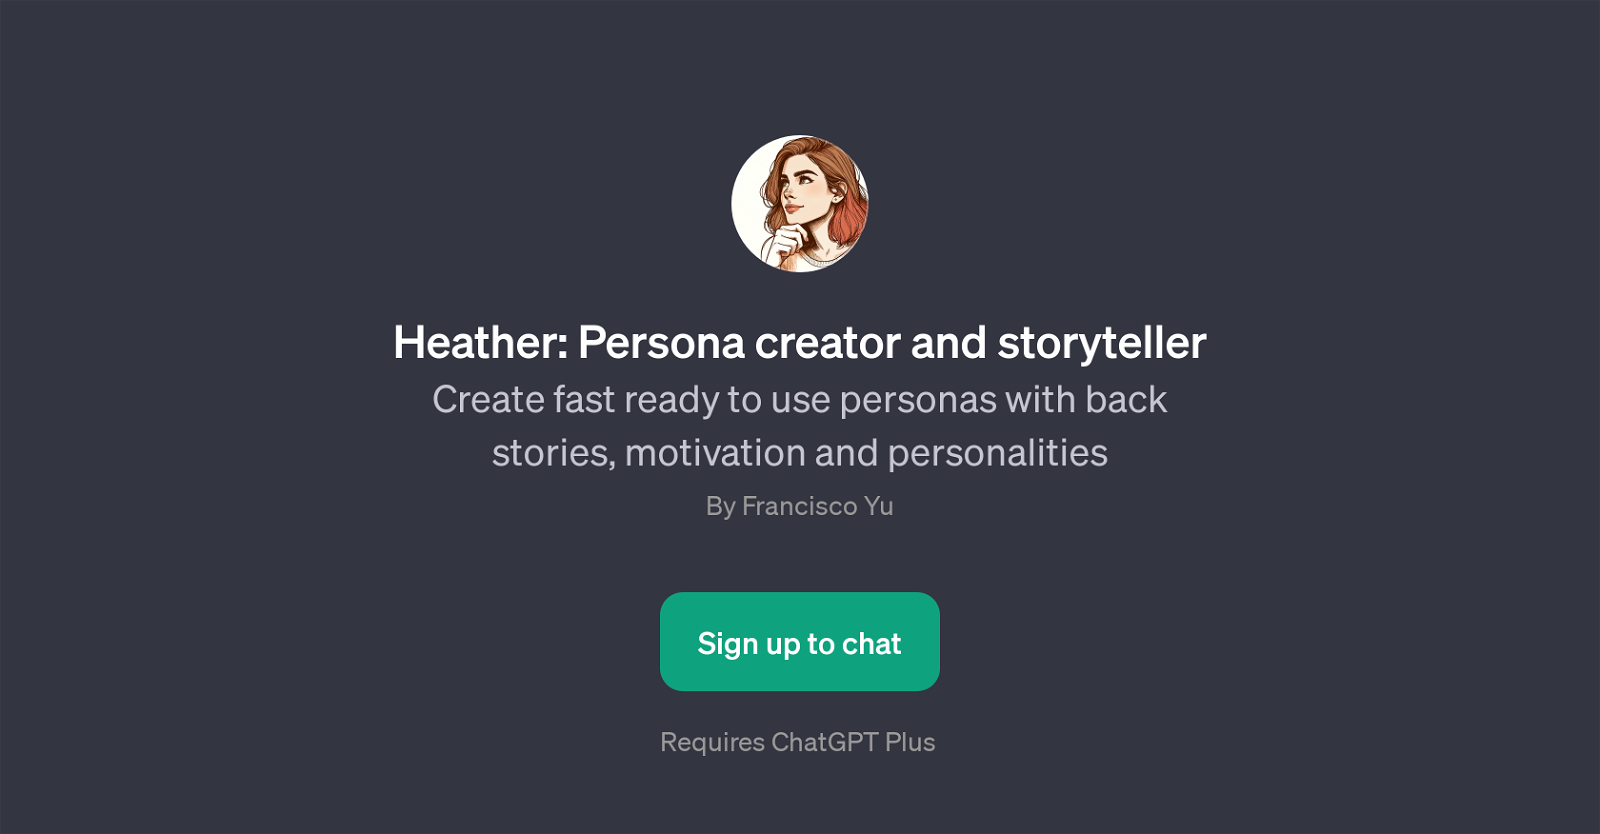 Heather: Persona creator and storyteller website